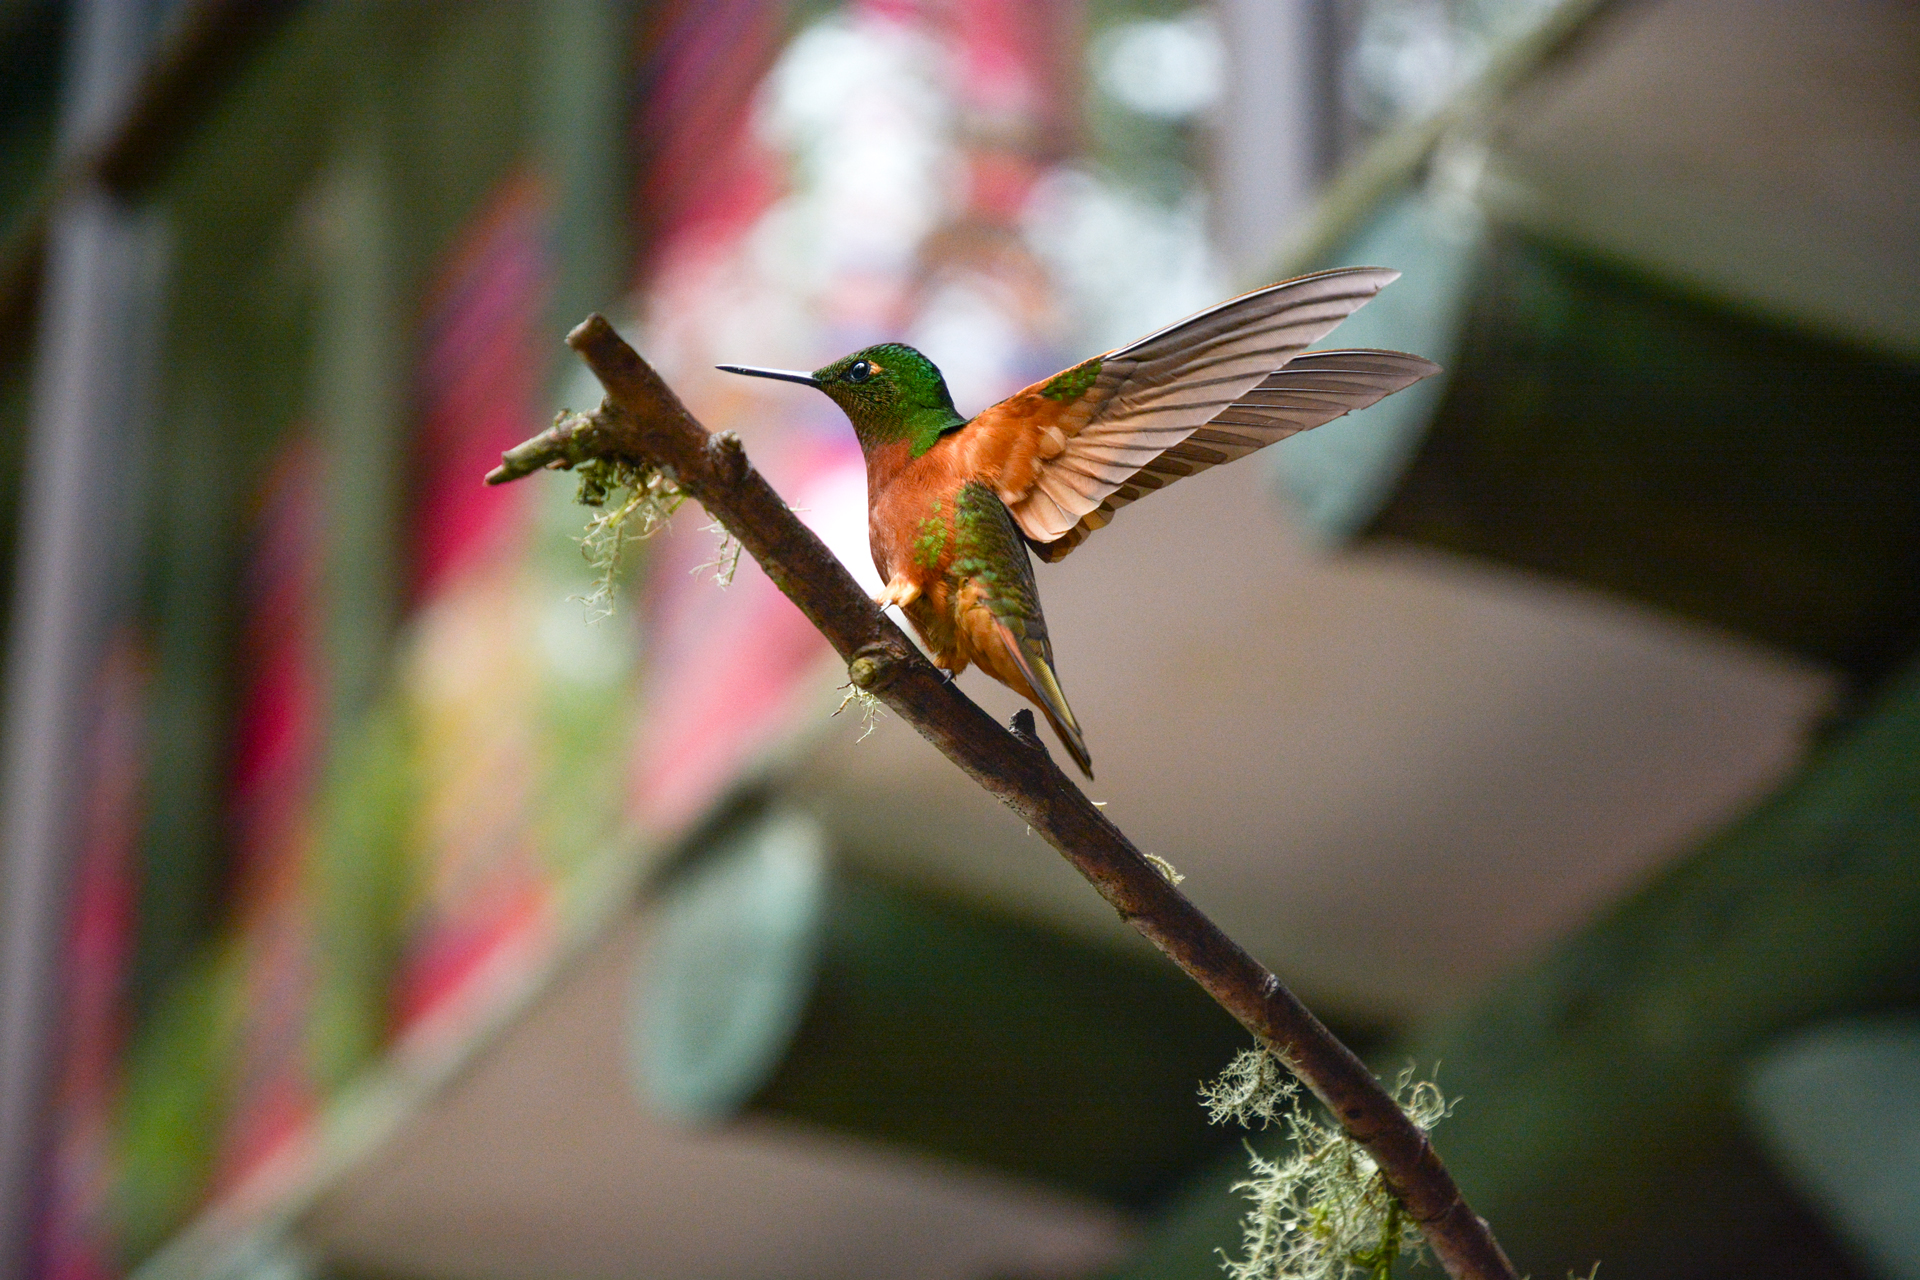 contiki tours me and we ecuador travel experience guango lodge hummingbird sanctuary